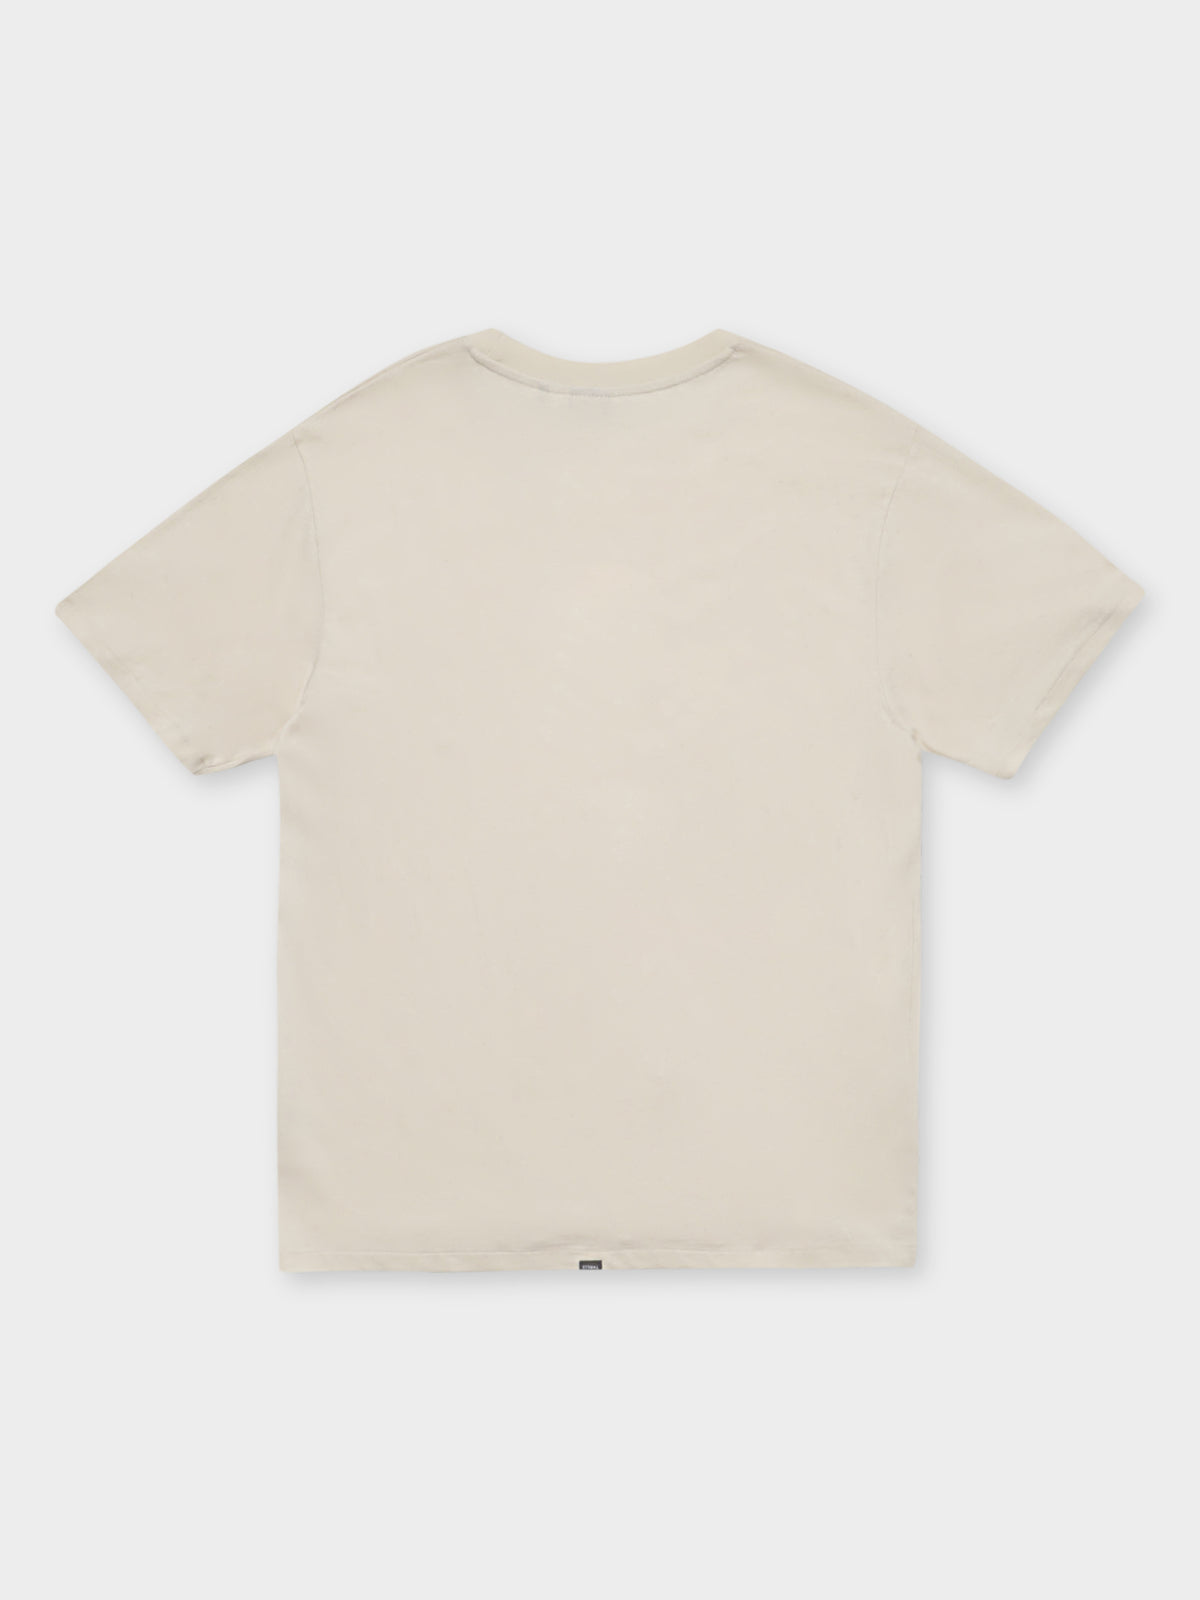 Golden Merch Fit T-Shirt in White